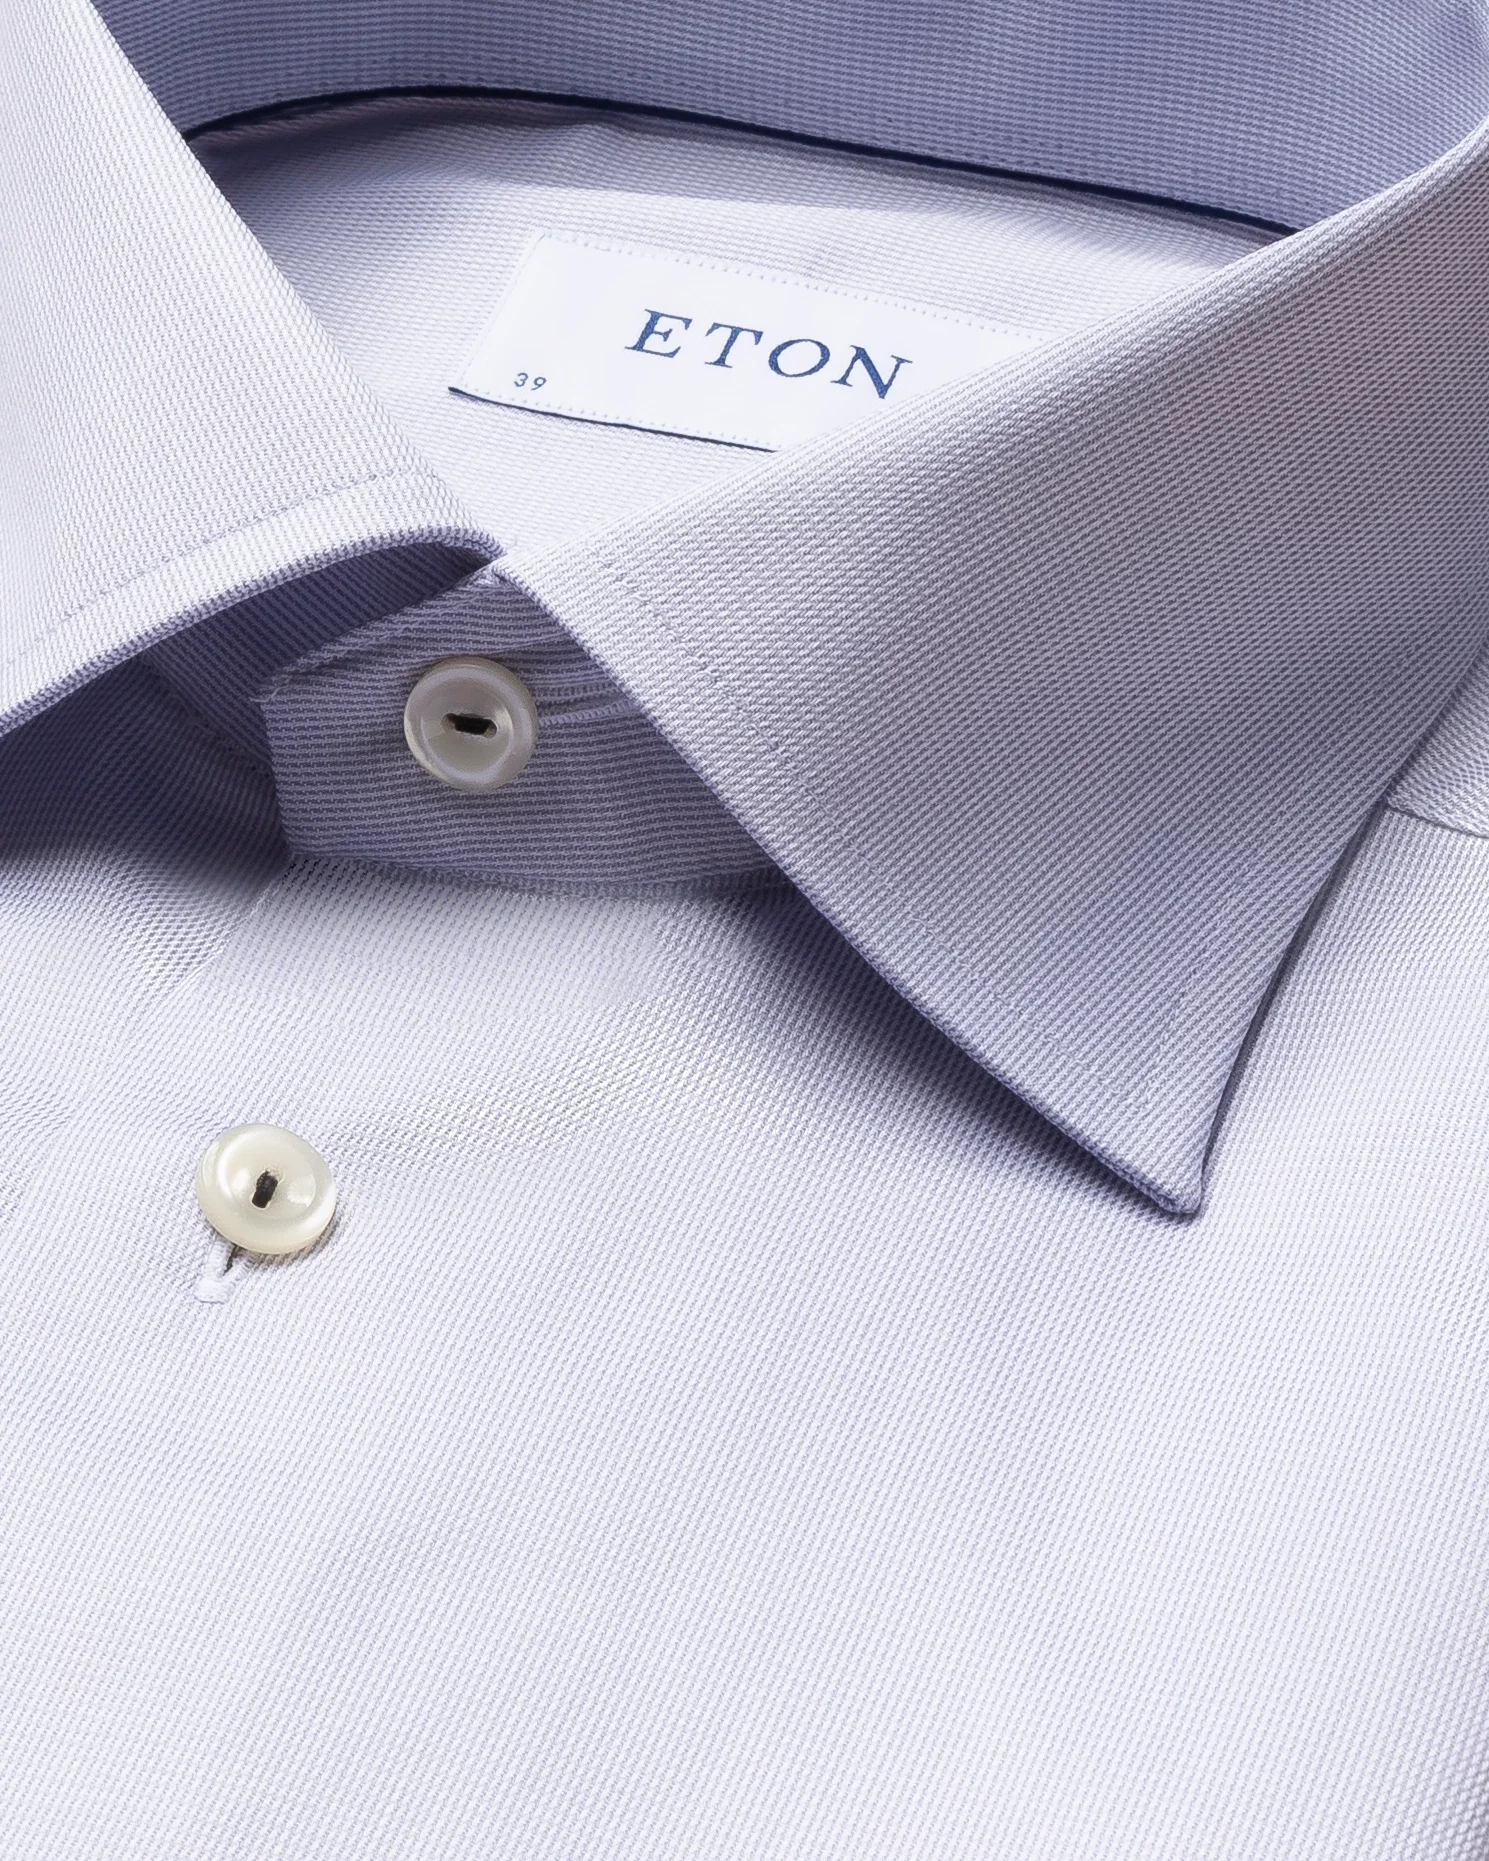 Eton - light grey royal twill shirt